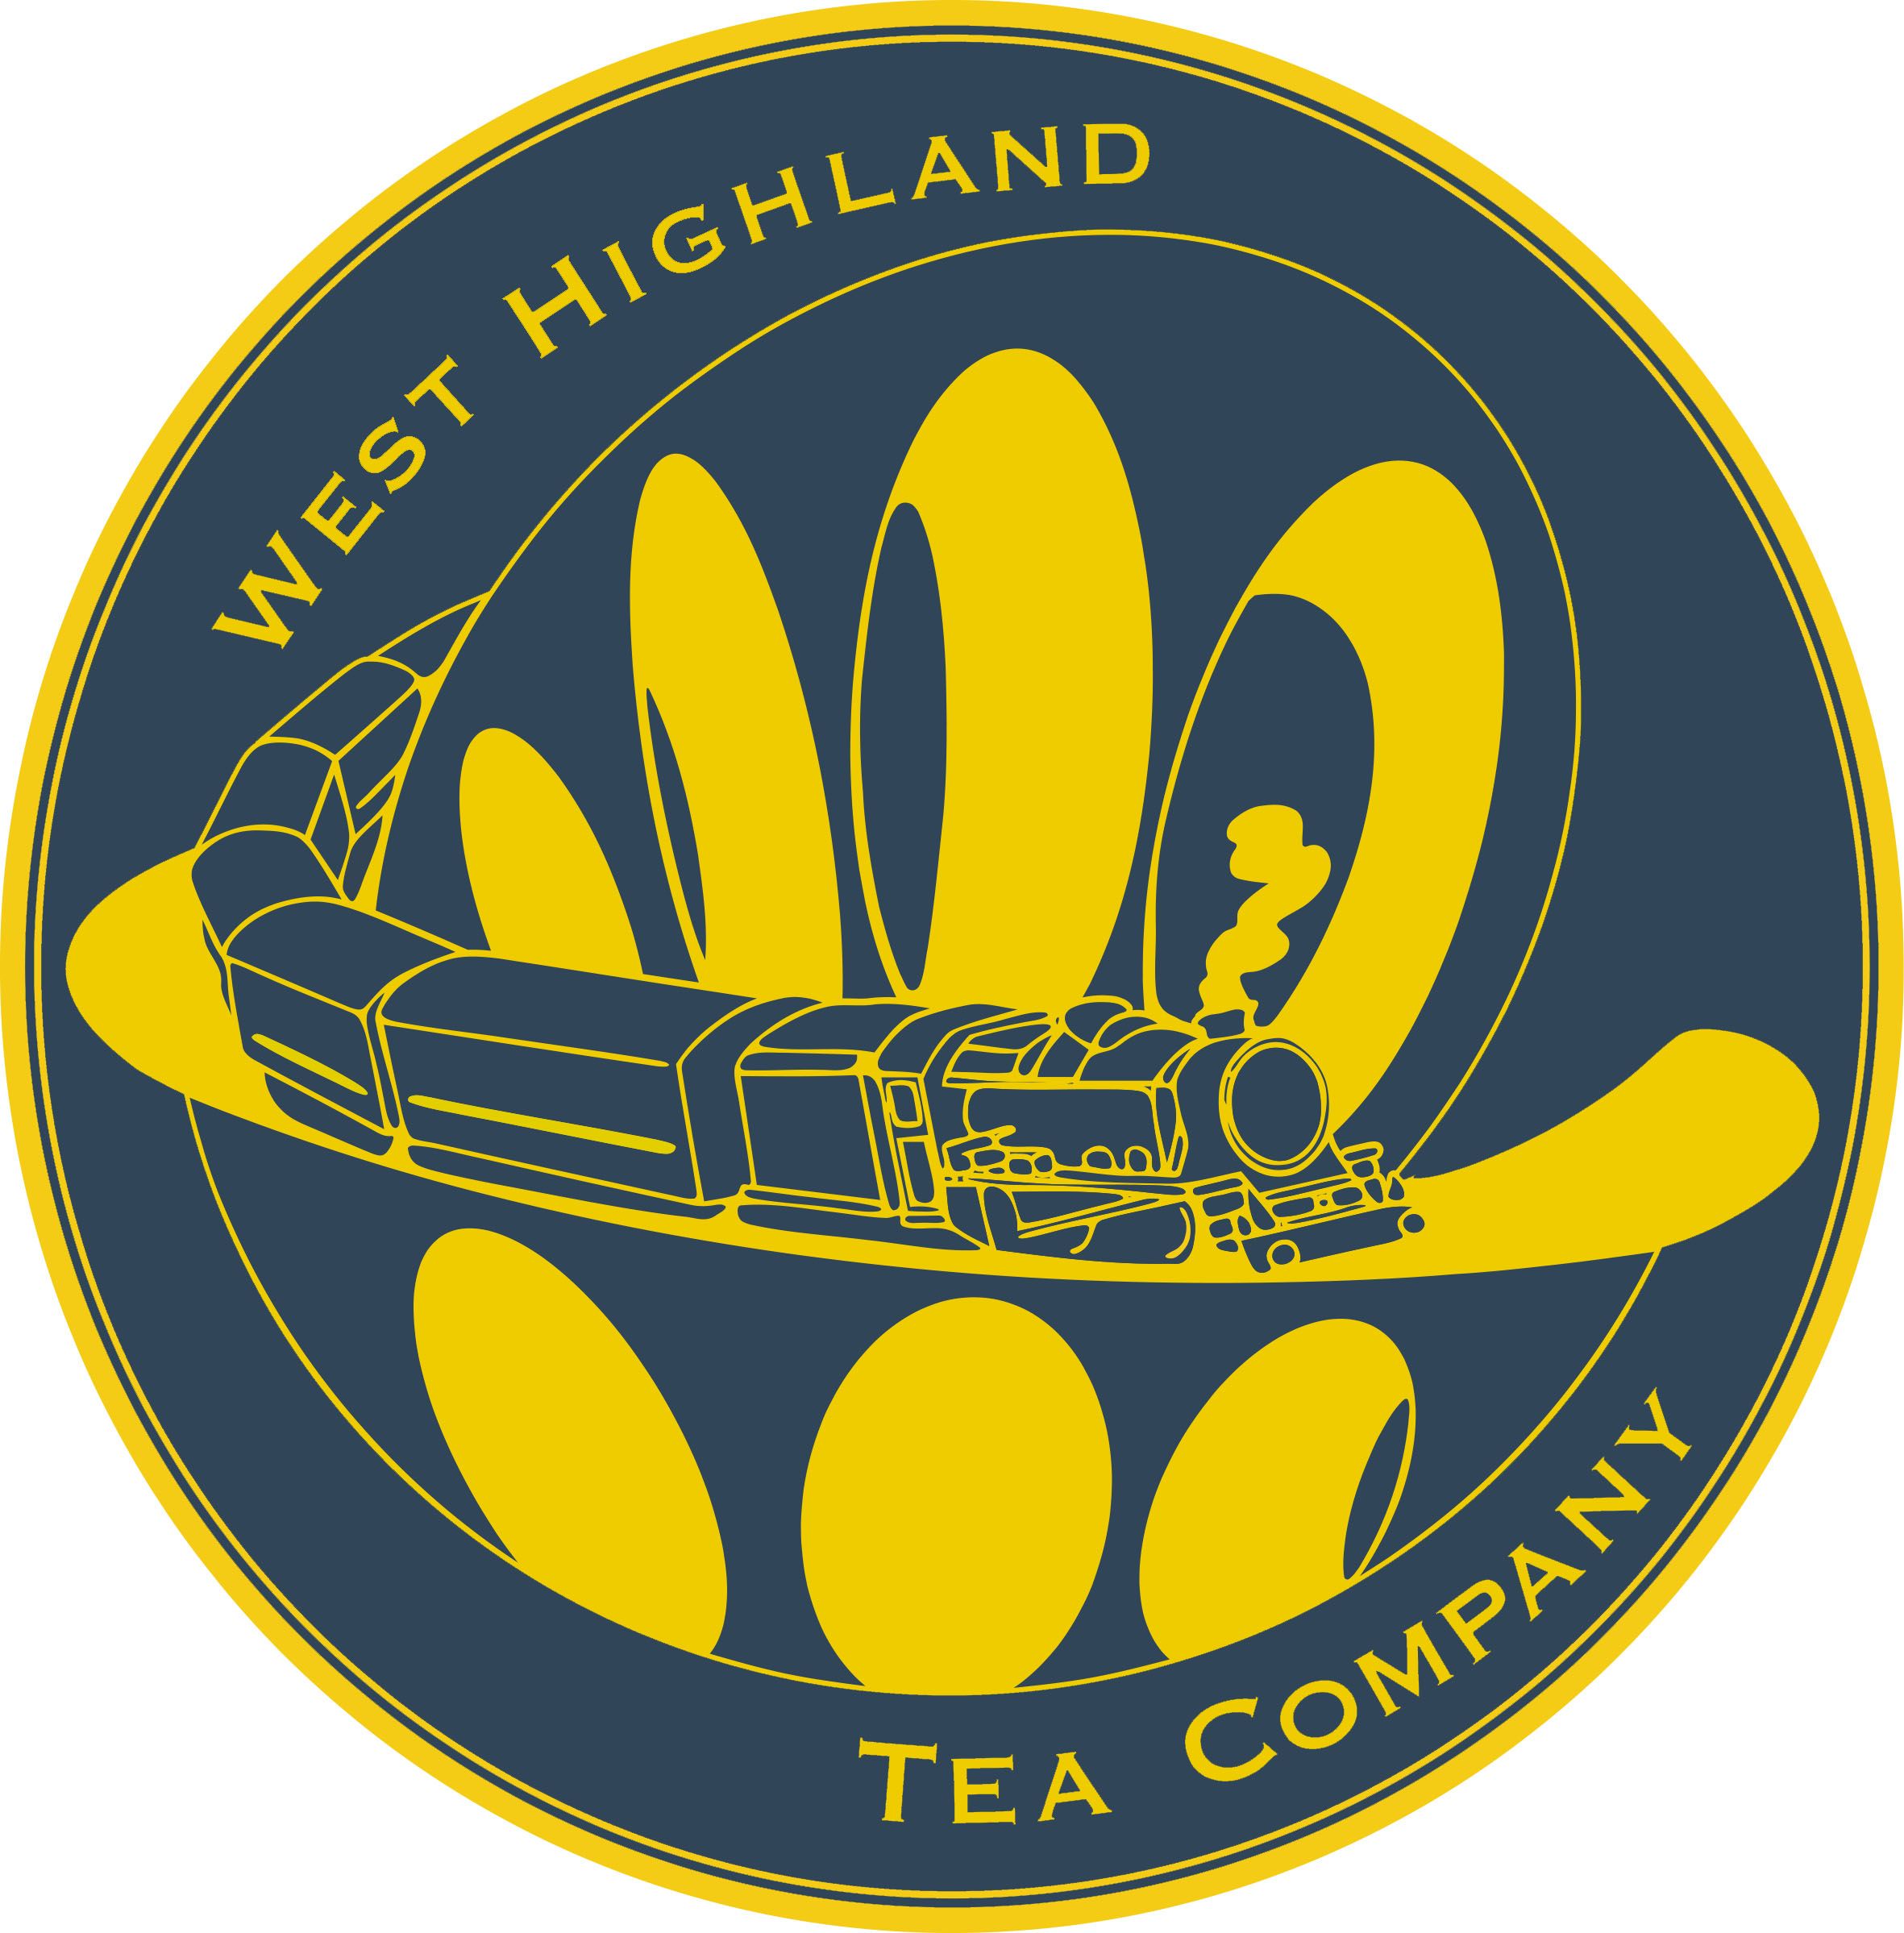 West Highland Tea Company